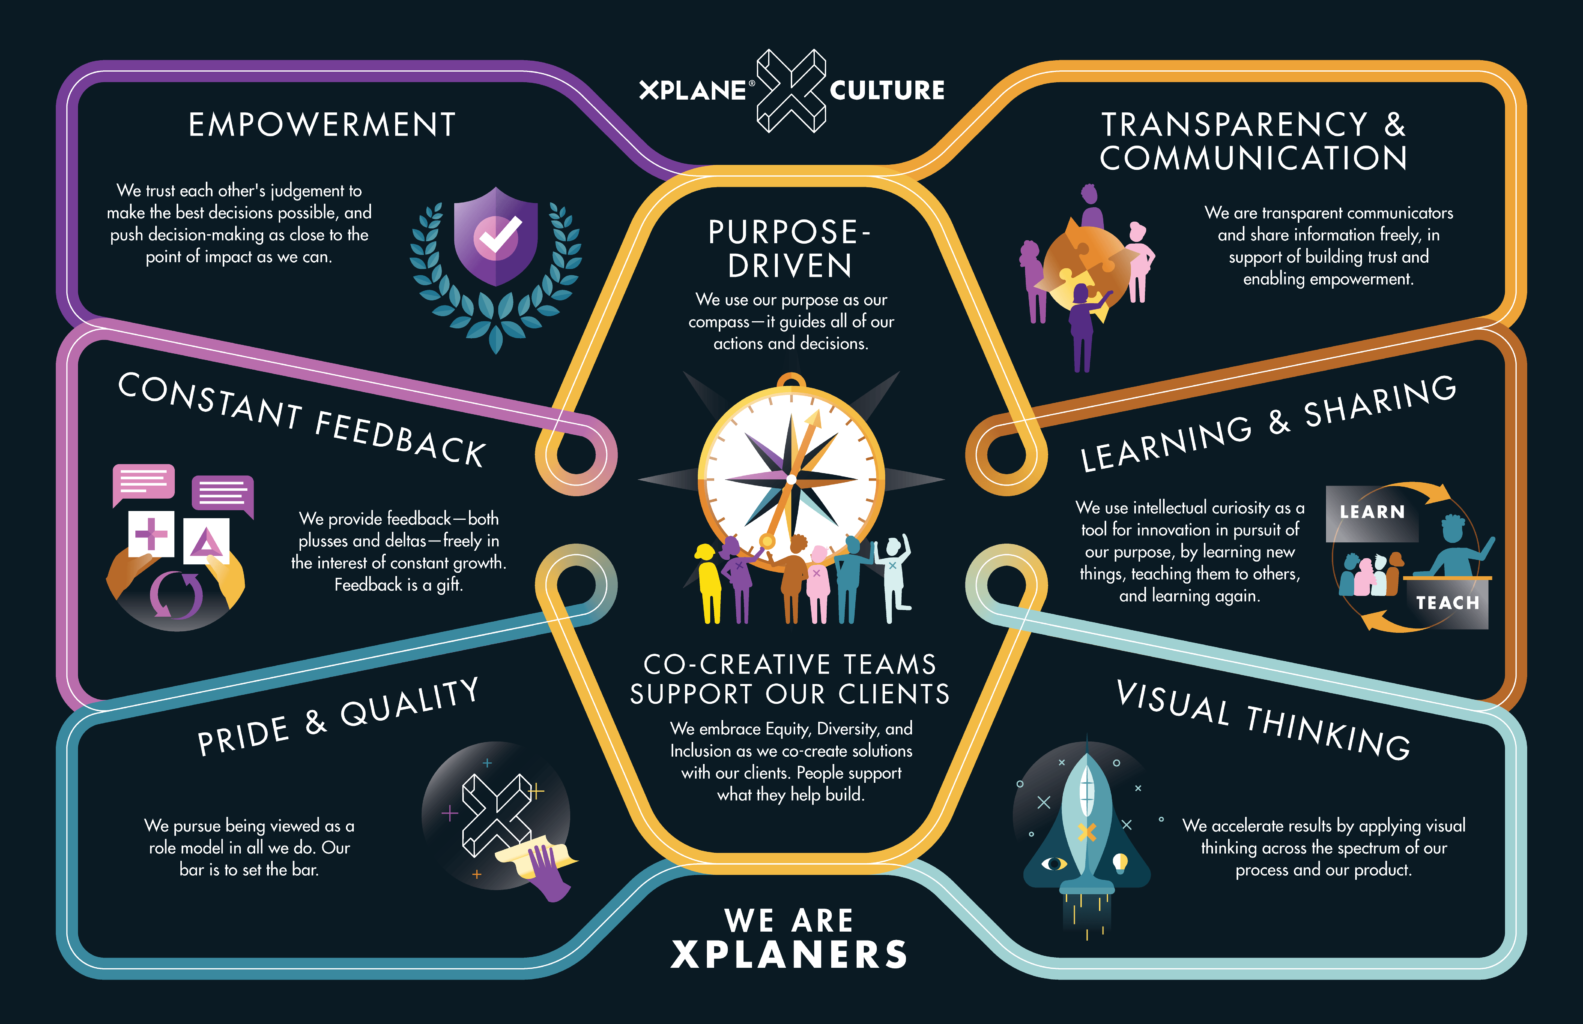 Infographic showing XPLANE's Culture